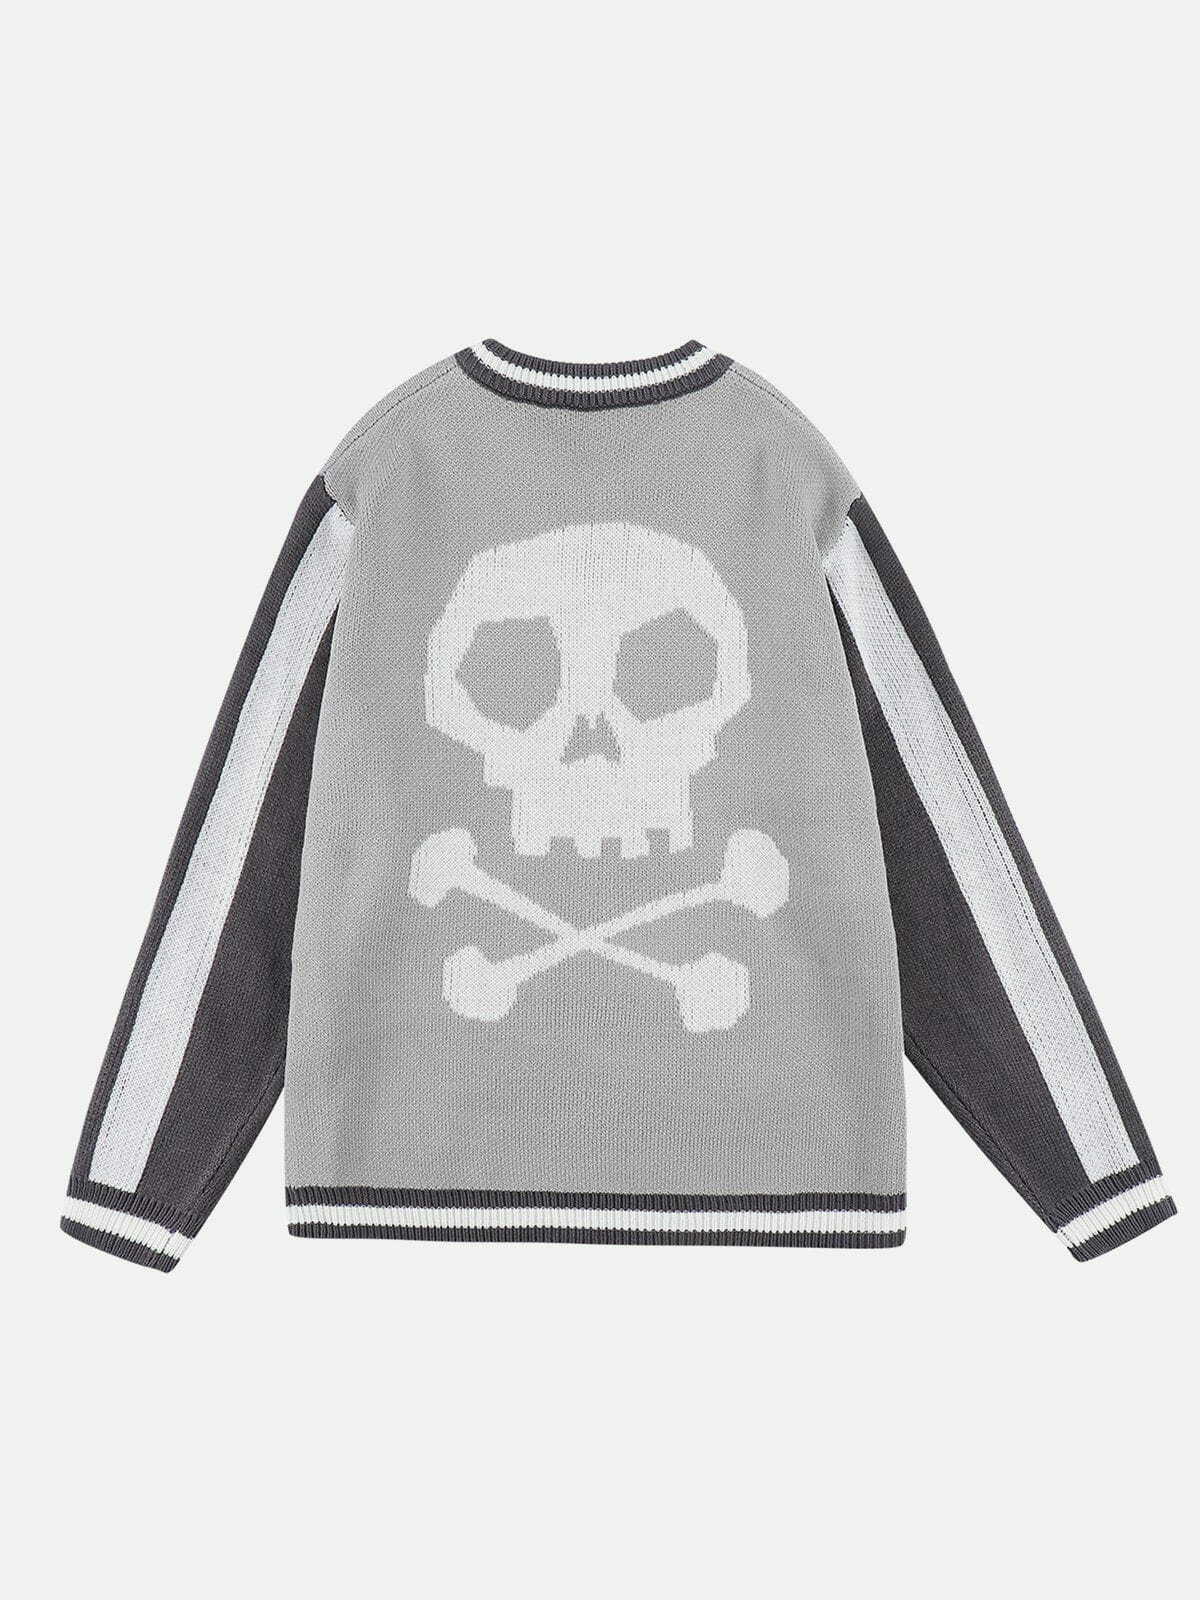 stylish skeleton stitching sweater edgy y2k fashion essential 8910